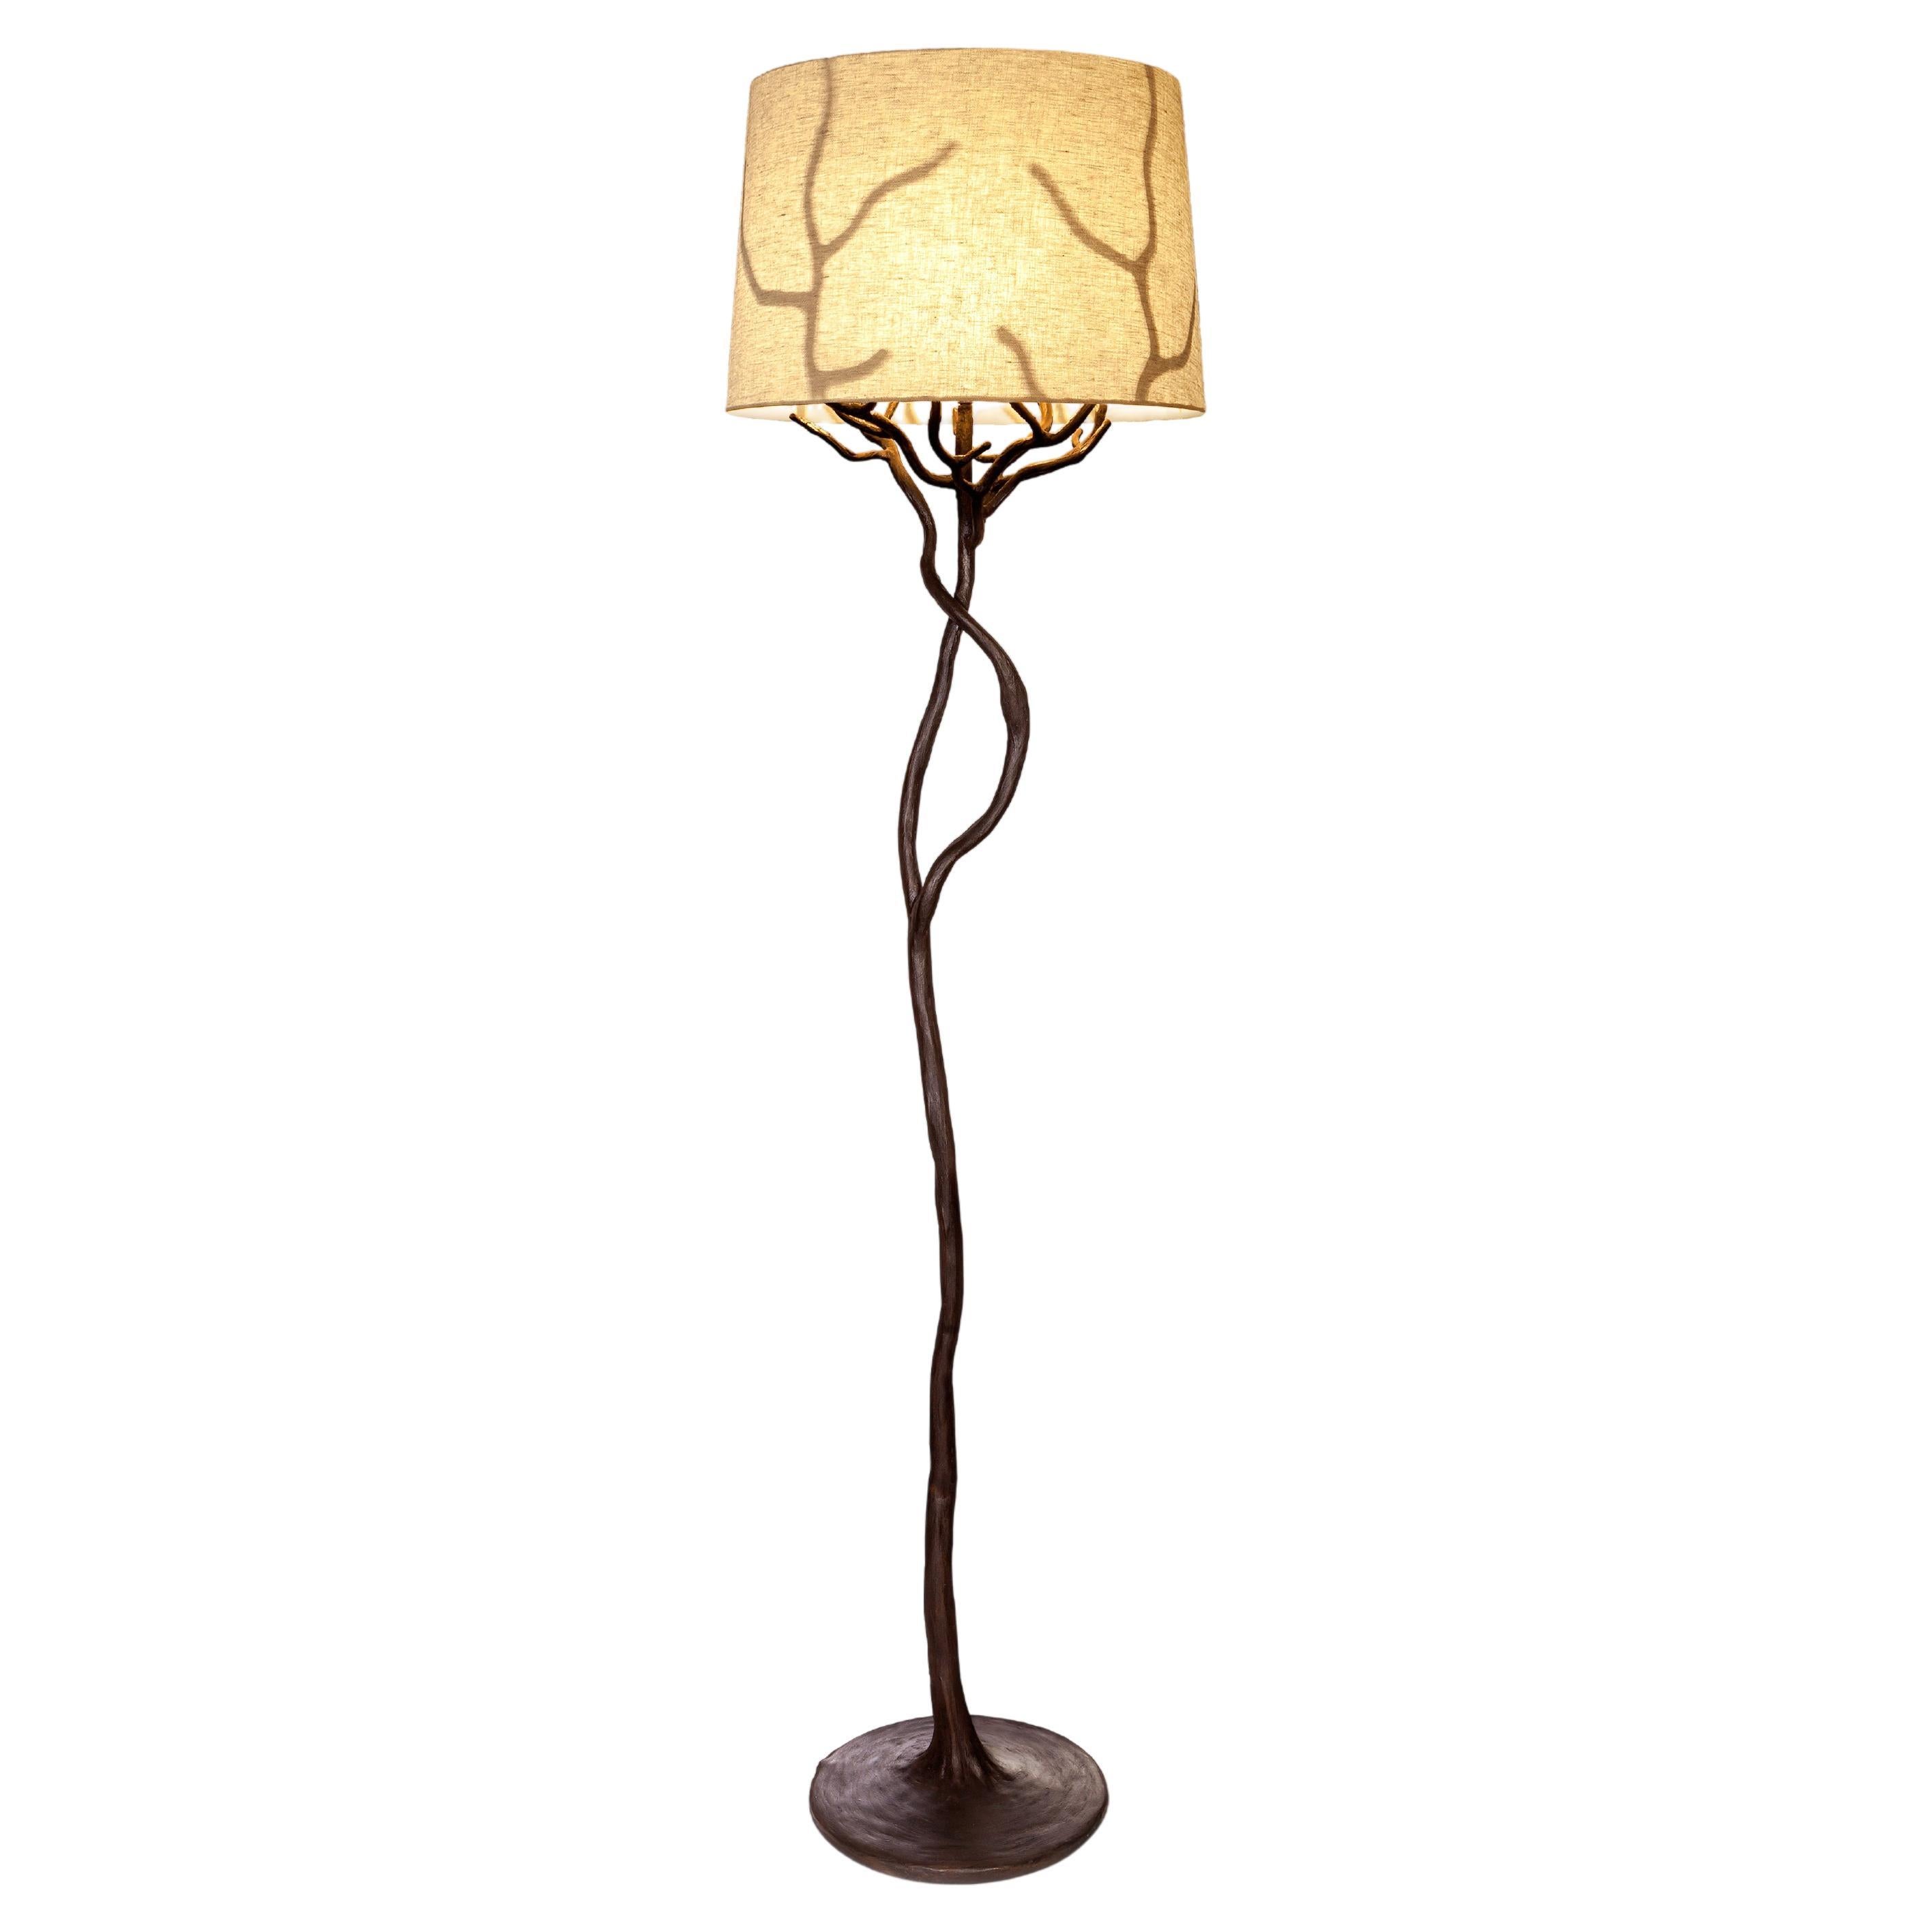 Organic Floor Lamp “Etna” in Forest Brown Finish, Benediko For Sale